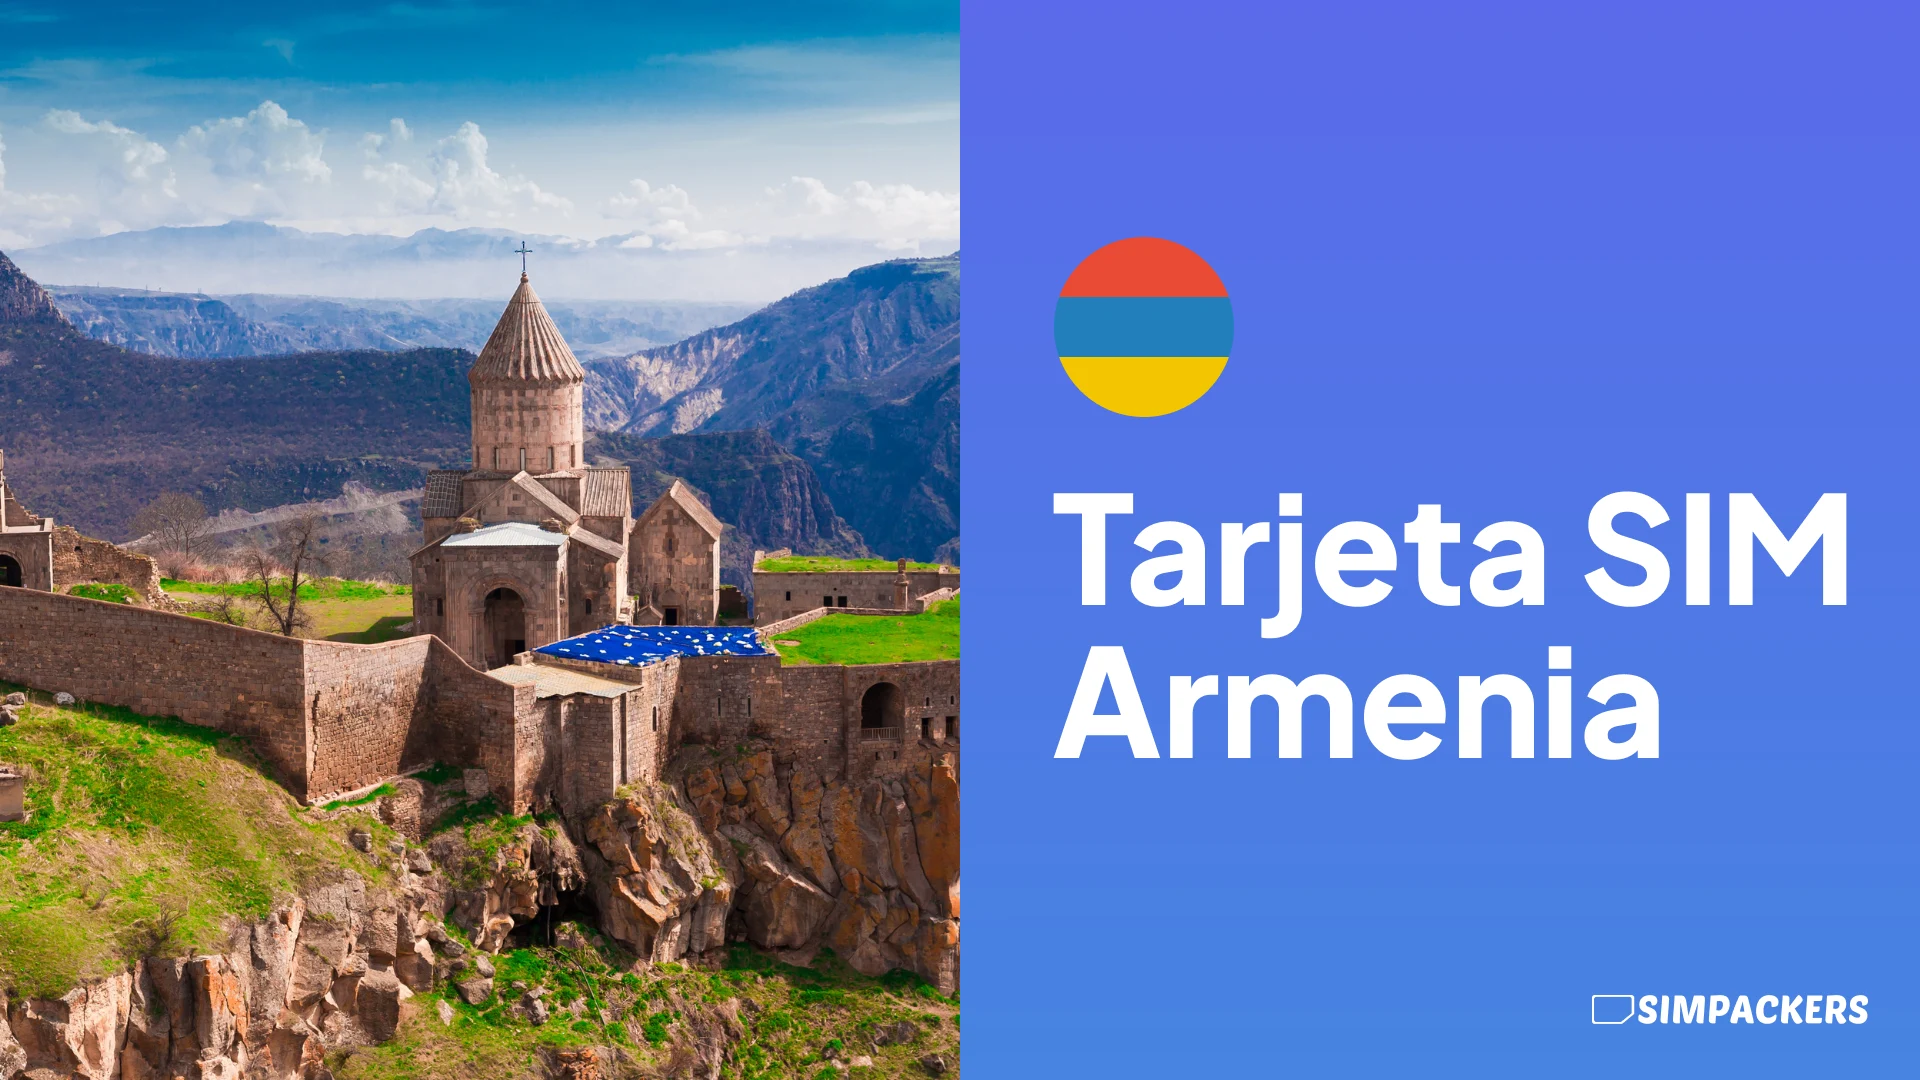 ES/FEATURED_IMAGES/tarjeta-sim-armenia.webp